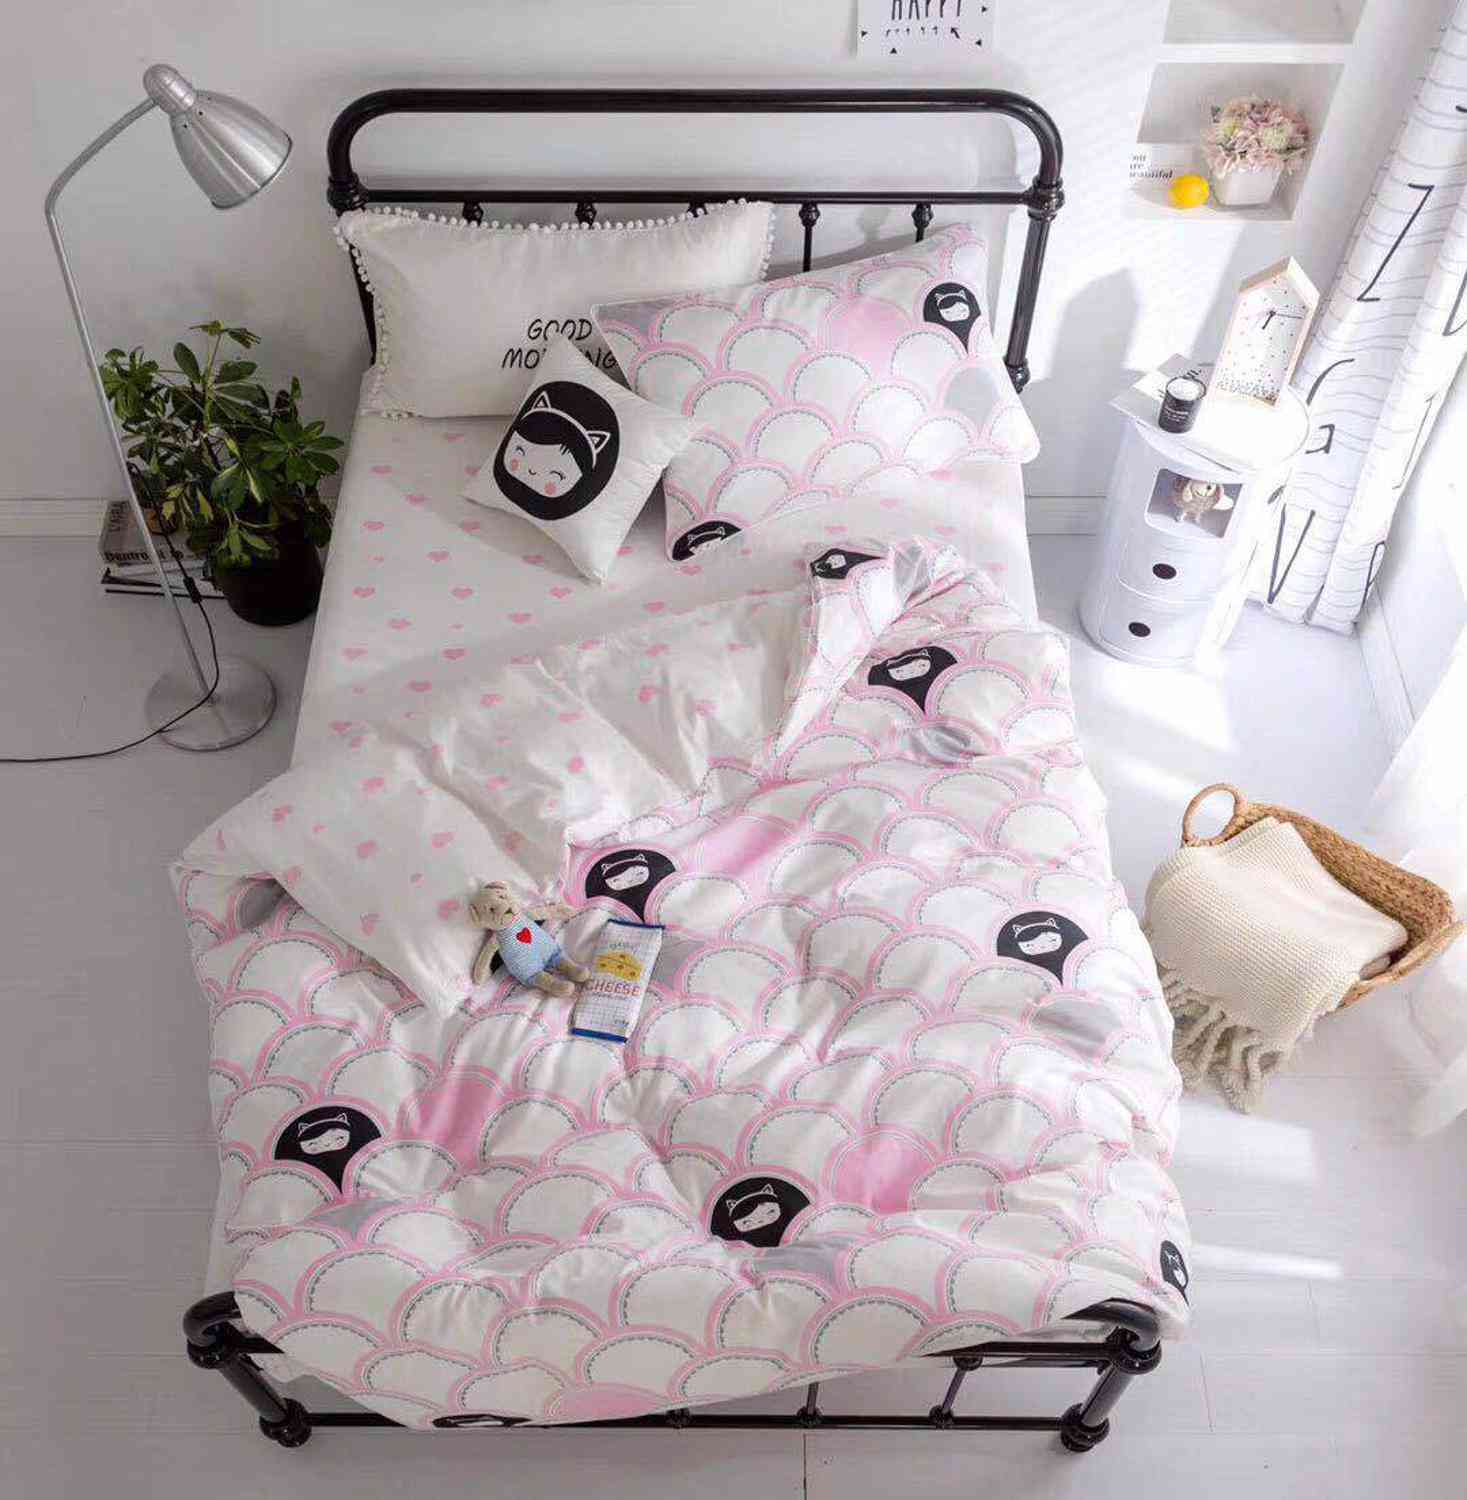 Baby Bedding Set For Boy Girl, Cartoon Soft Cotton Crib Bed